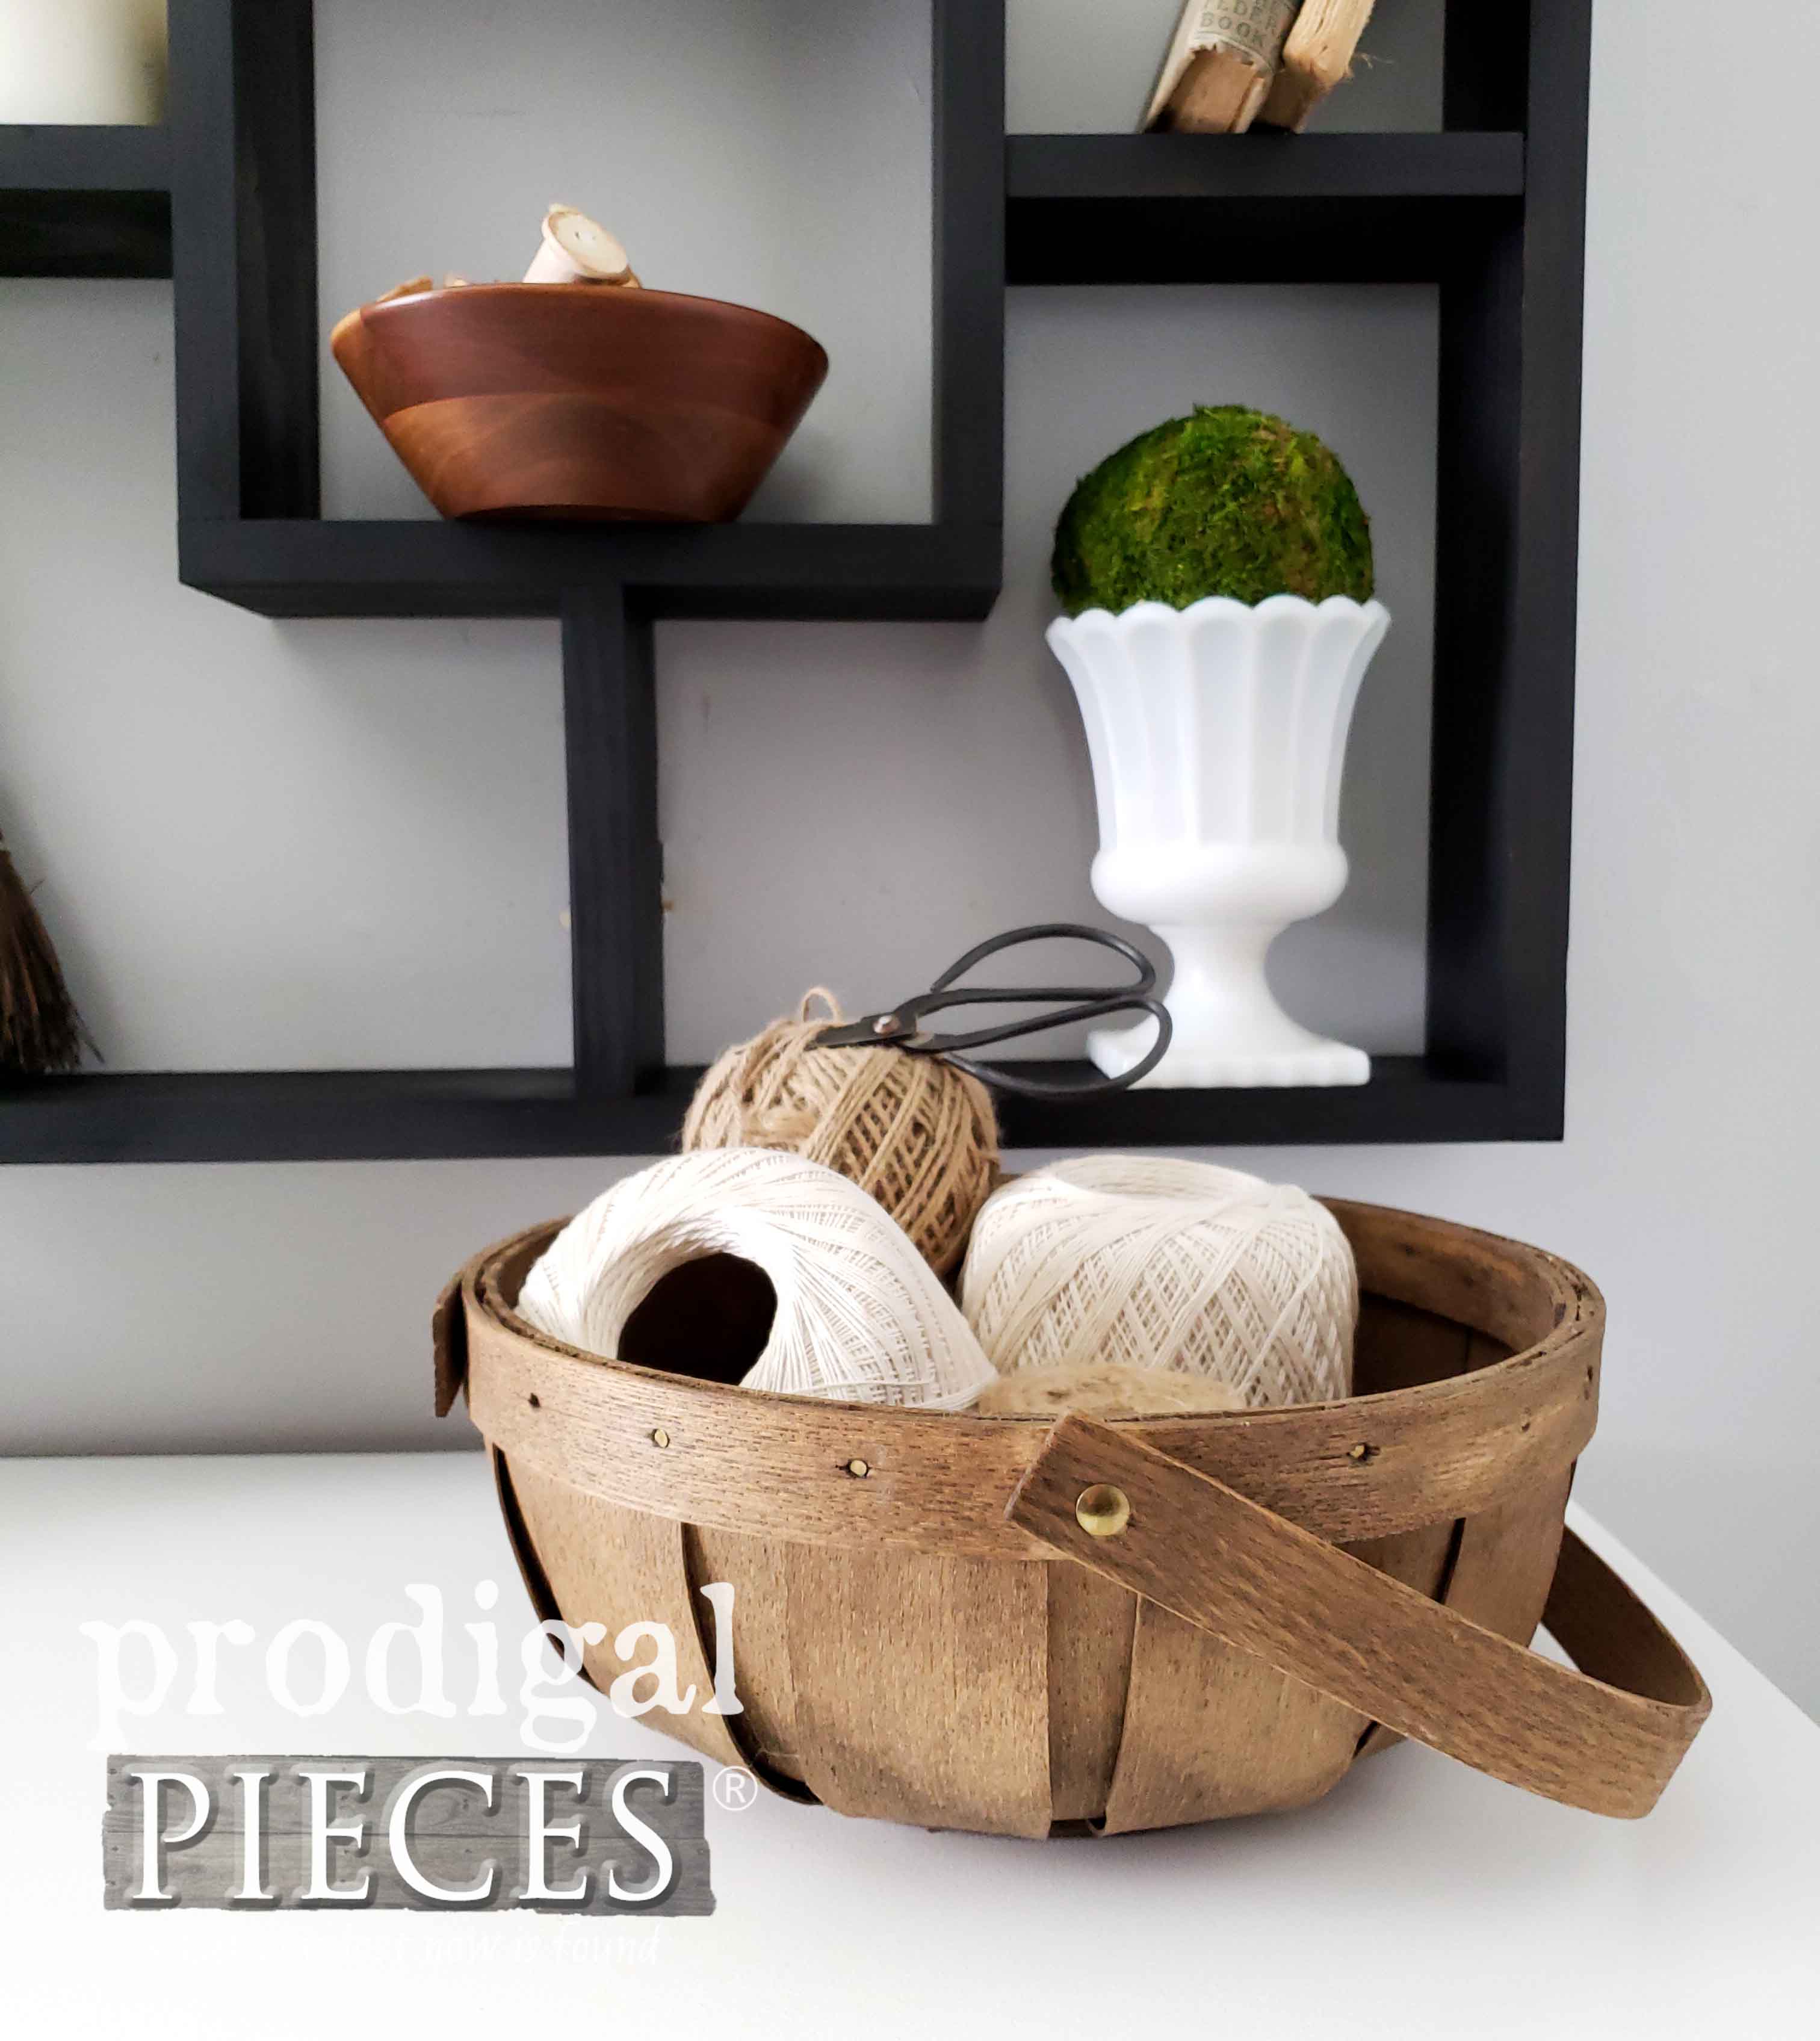 Woven Wood Farmhouse Basket Available at Prodigal Pieces | prodigalpieces.com